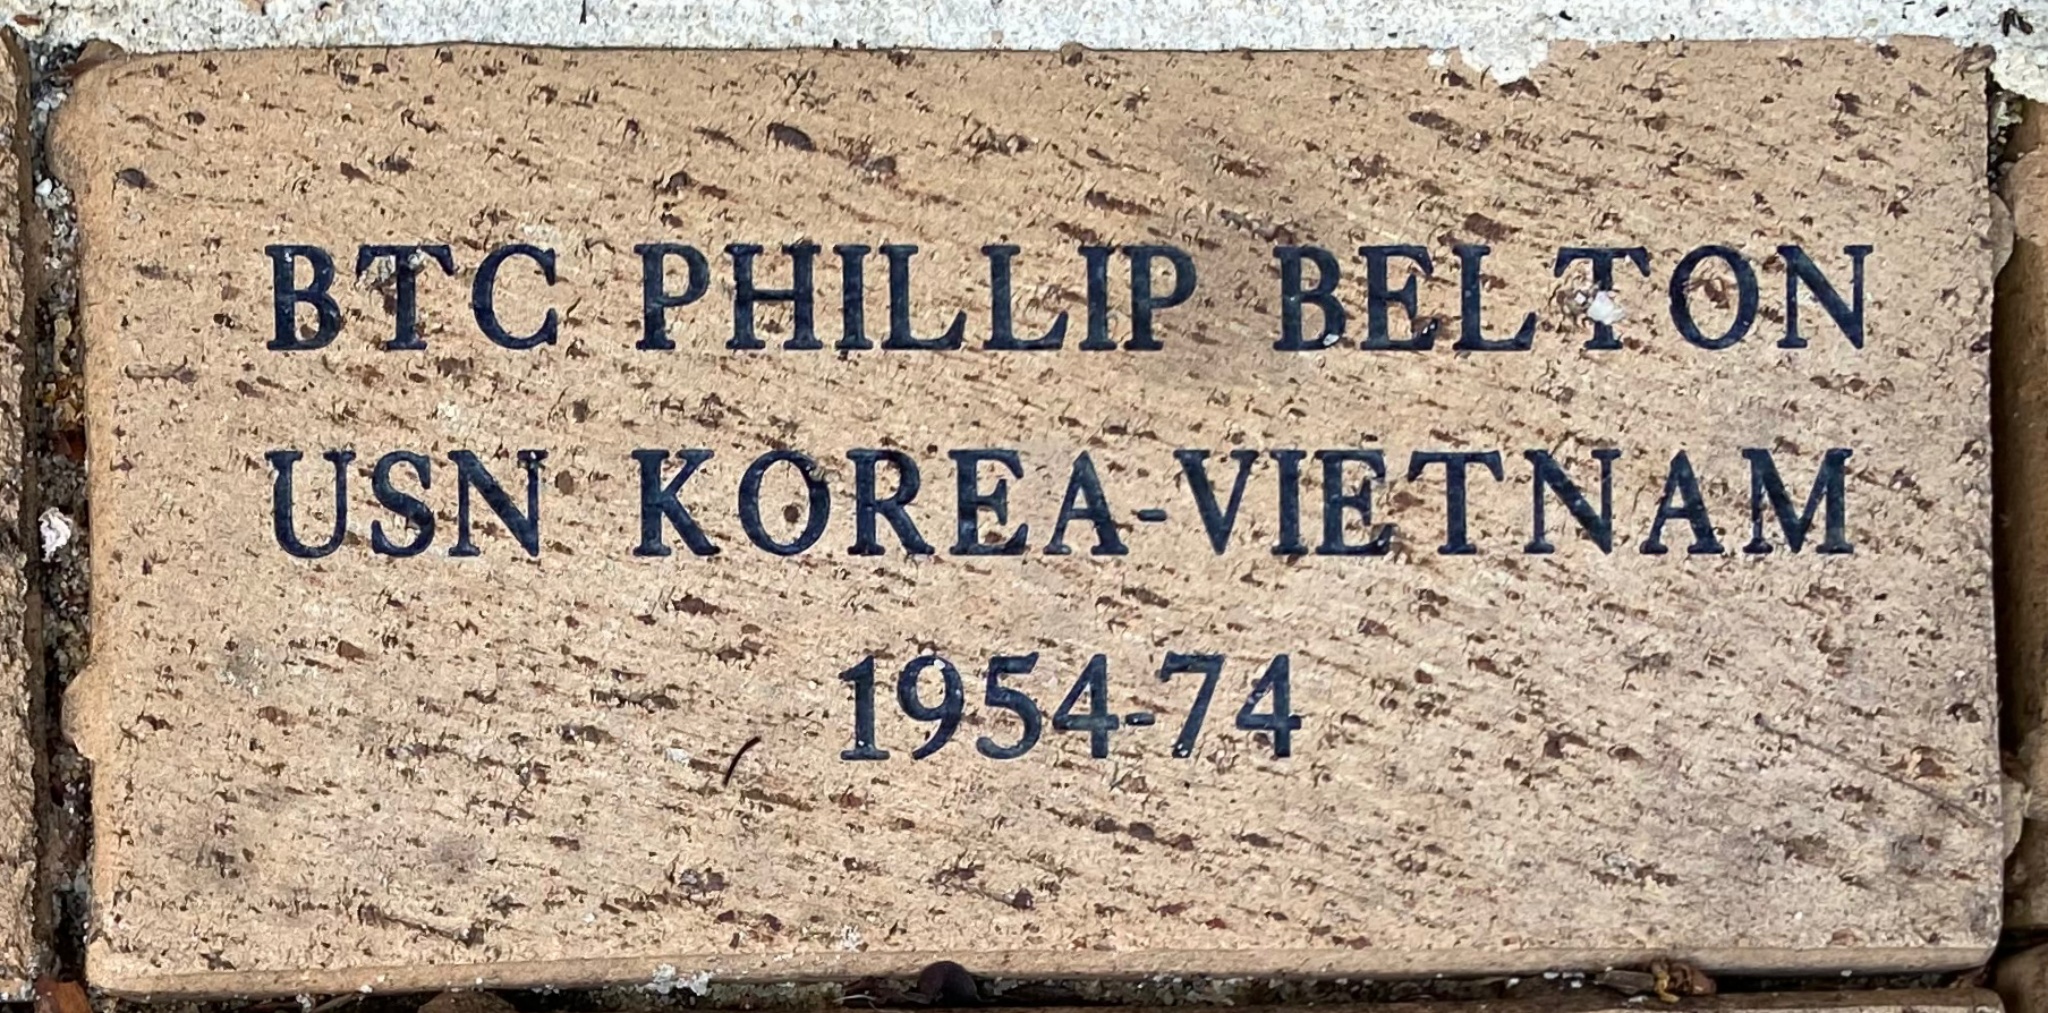 BTC PHILLIP BELTON USN KOREA-VIETNAM 1954-1974